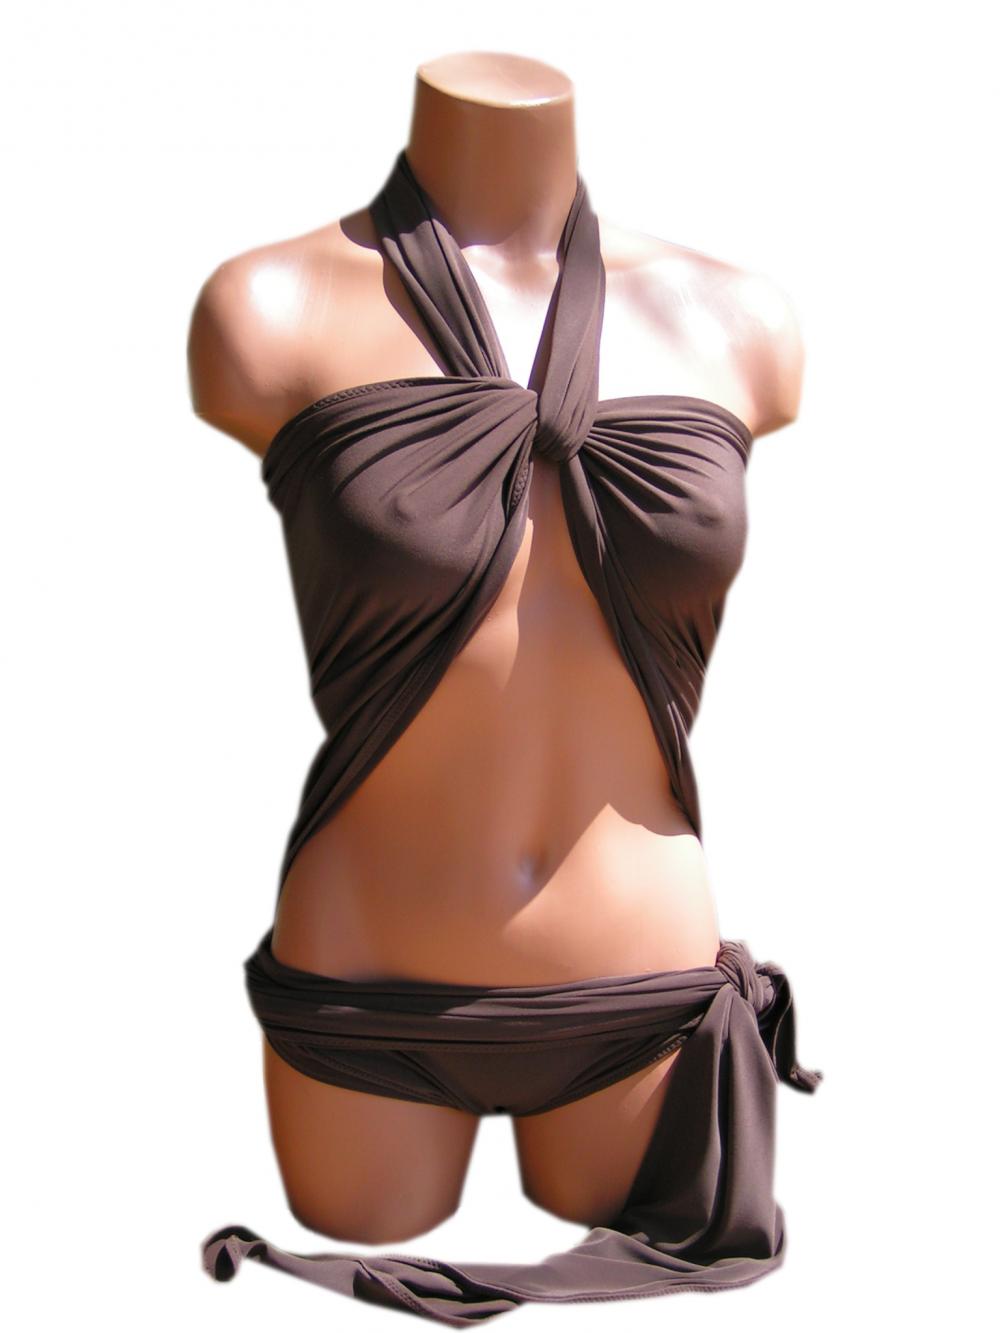 Bathing Suit Medium Wrap Around Swimsuit Solid Chocolate Brown